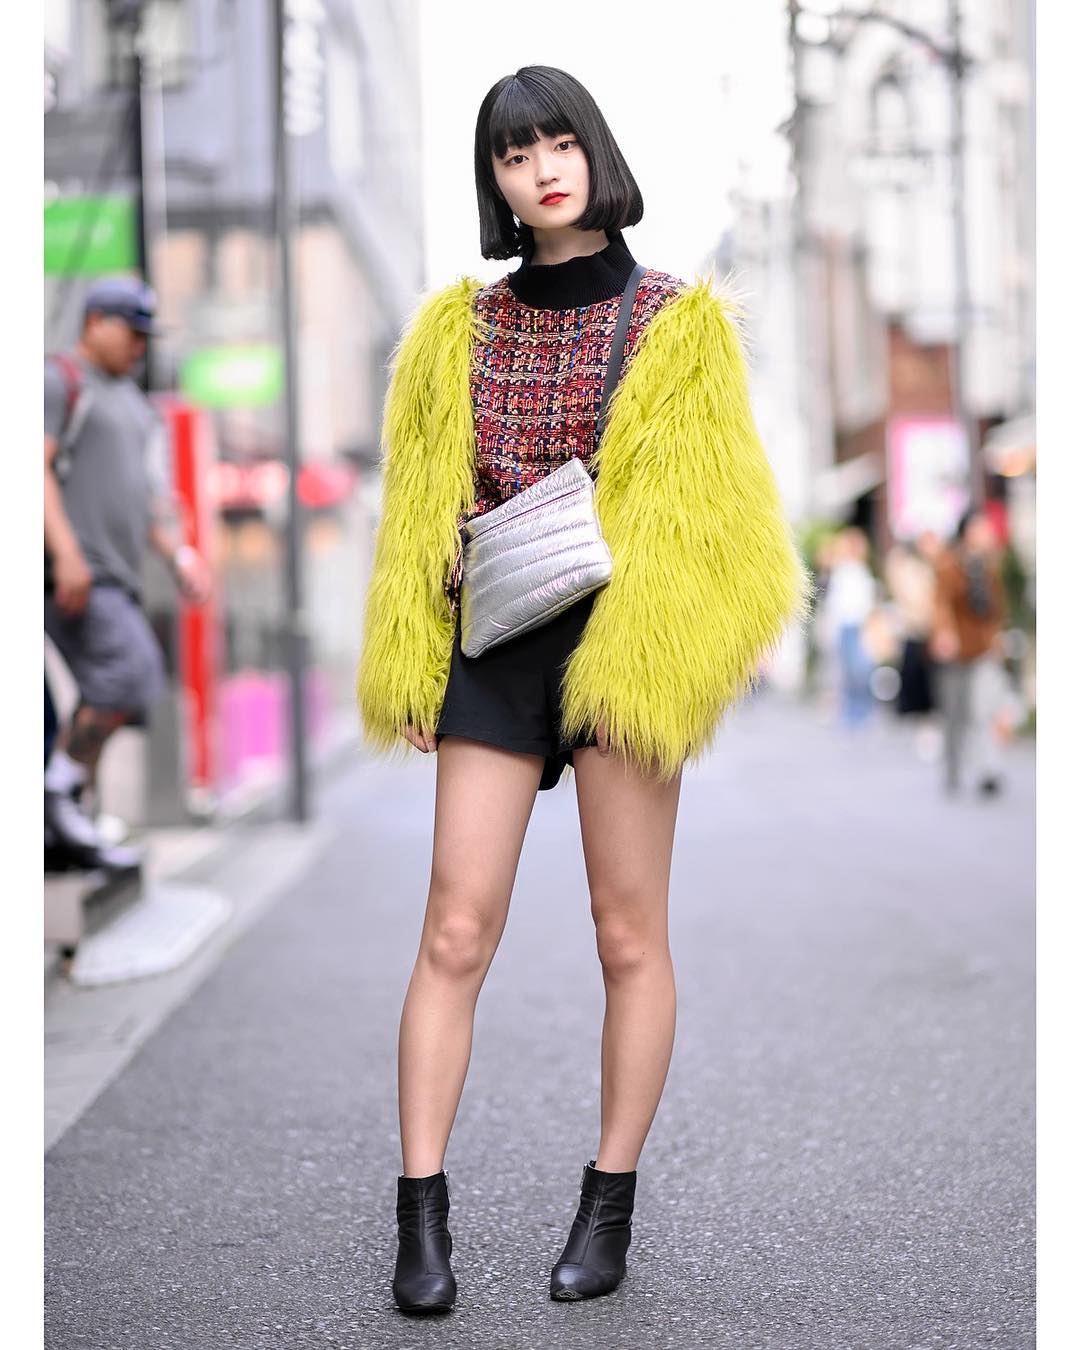 Tokyo Fashion: 14-year-old Japanese student and aspiring model Kanade ...